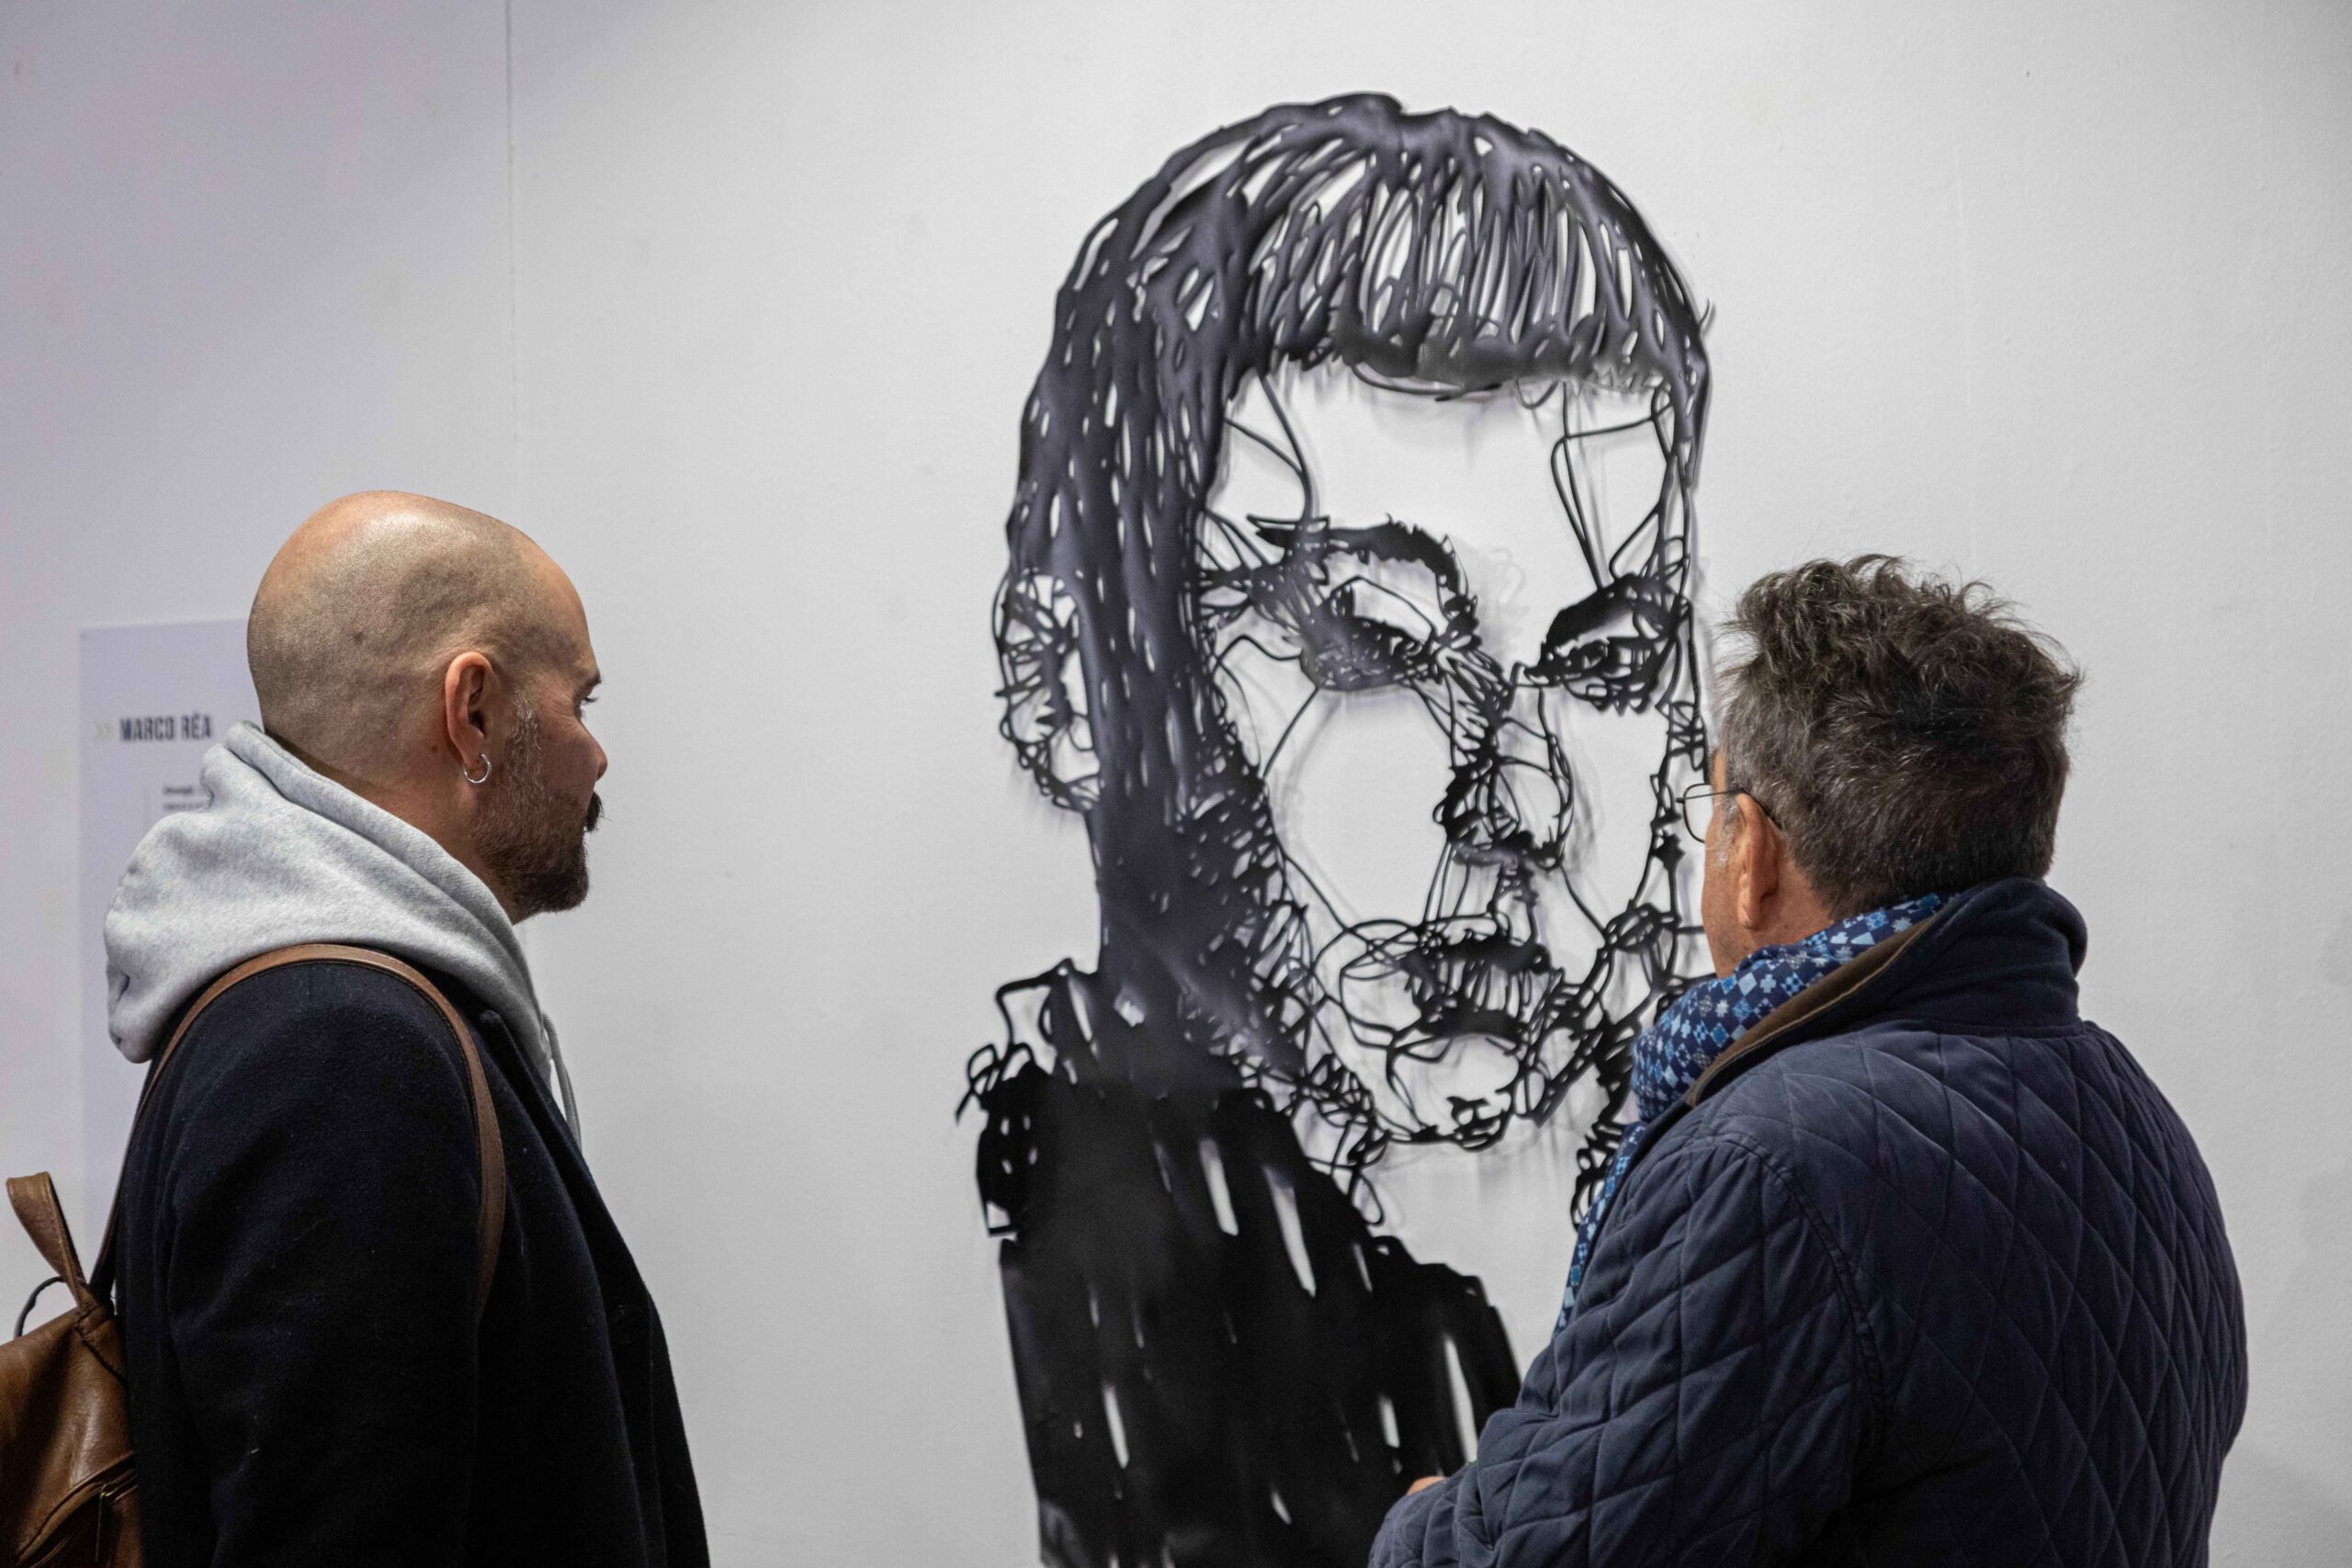 Marco Réa and Ercole Bartoli looking at Réa stencil at Bucolica Urbana opening - Photo: Massimiliano Frau